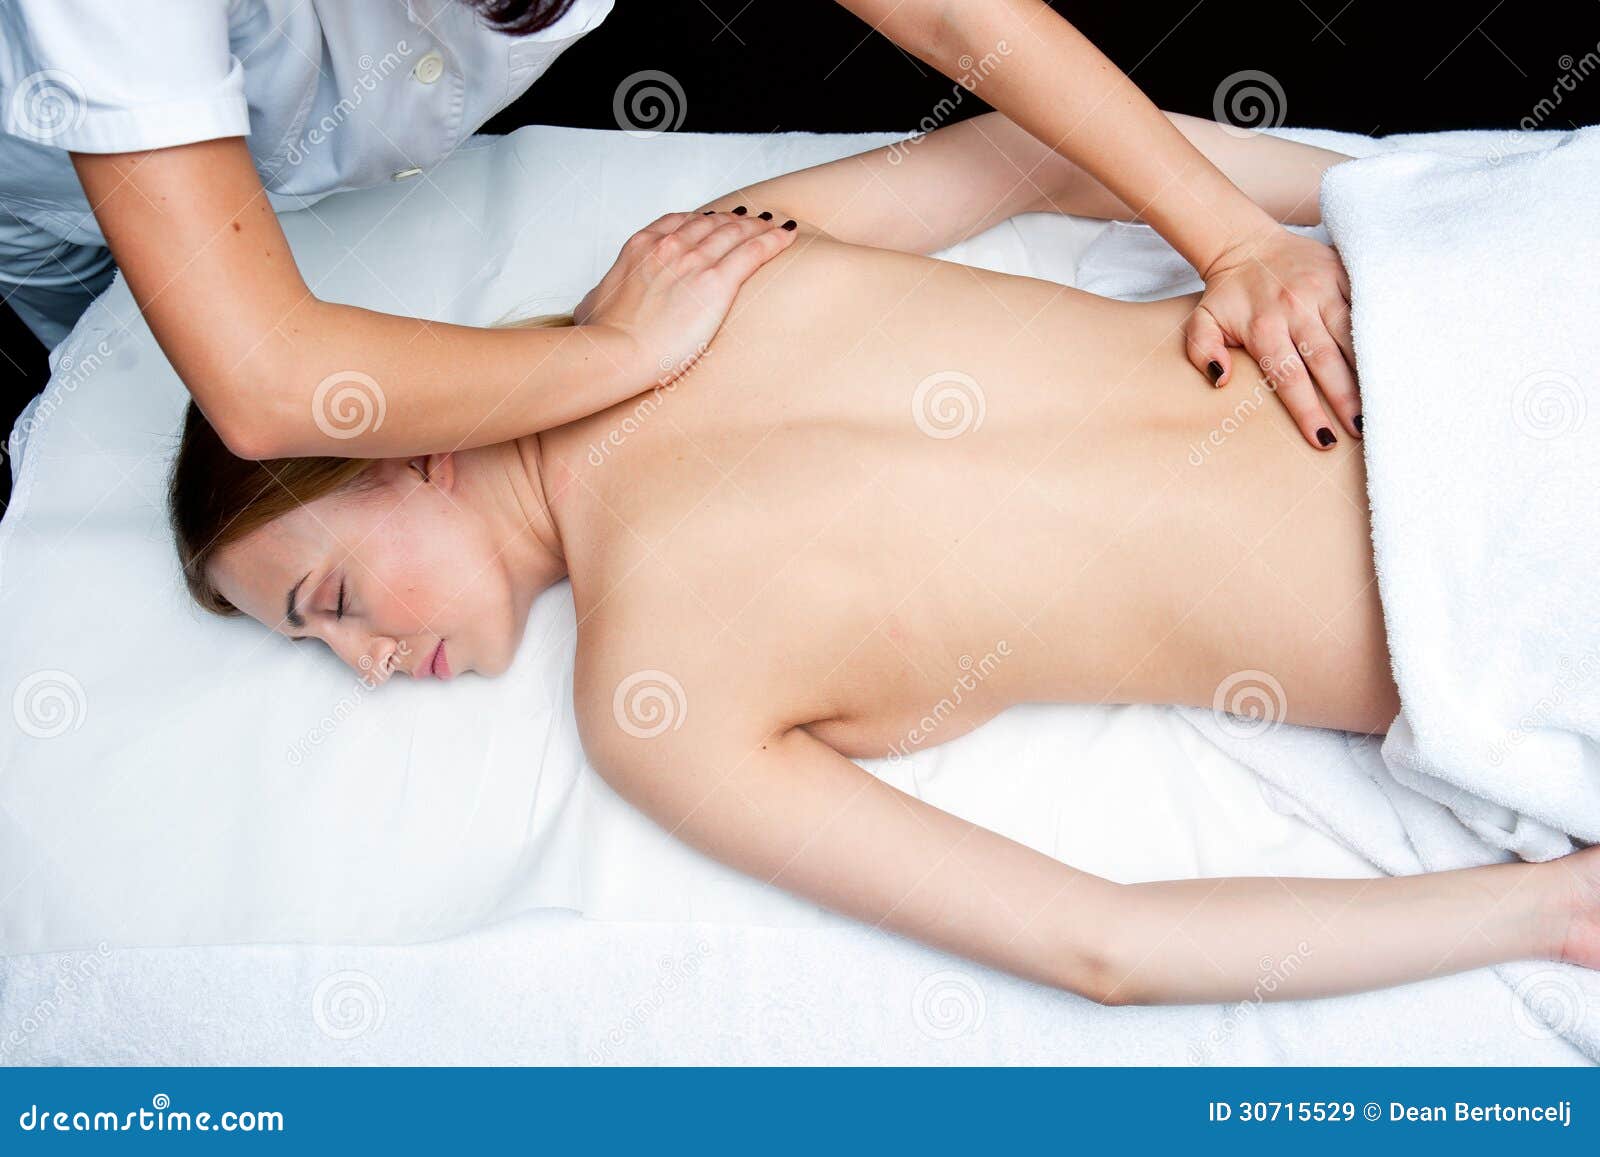 woman having chiropractic back adjustment